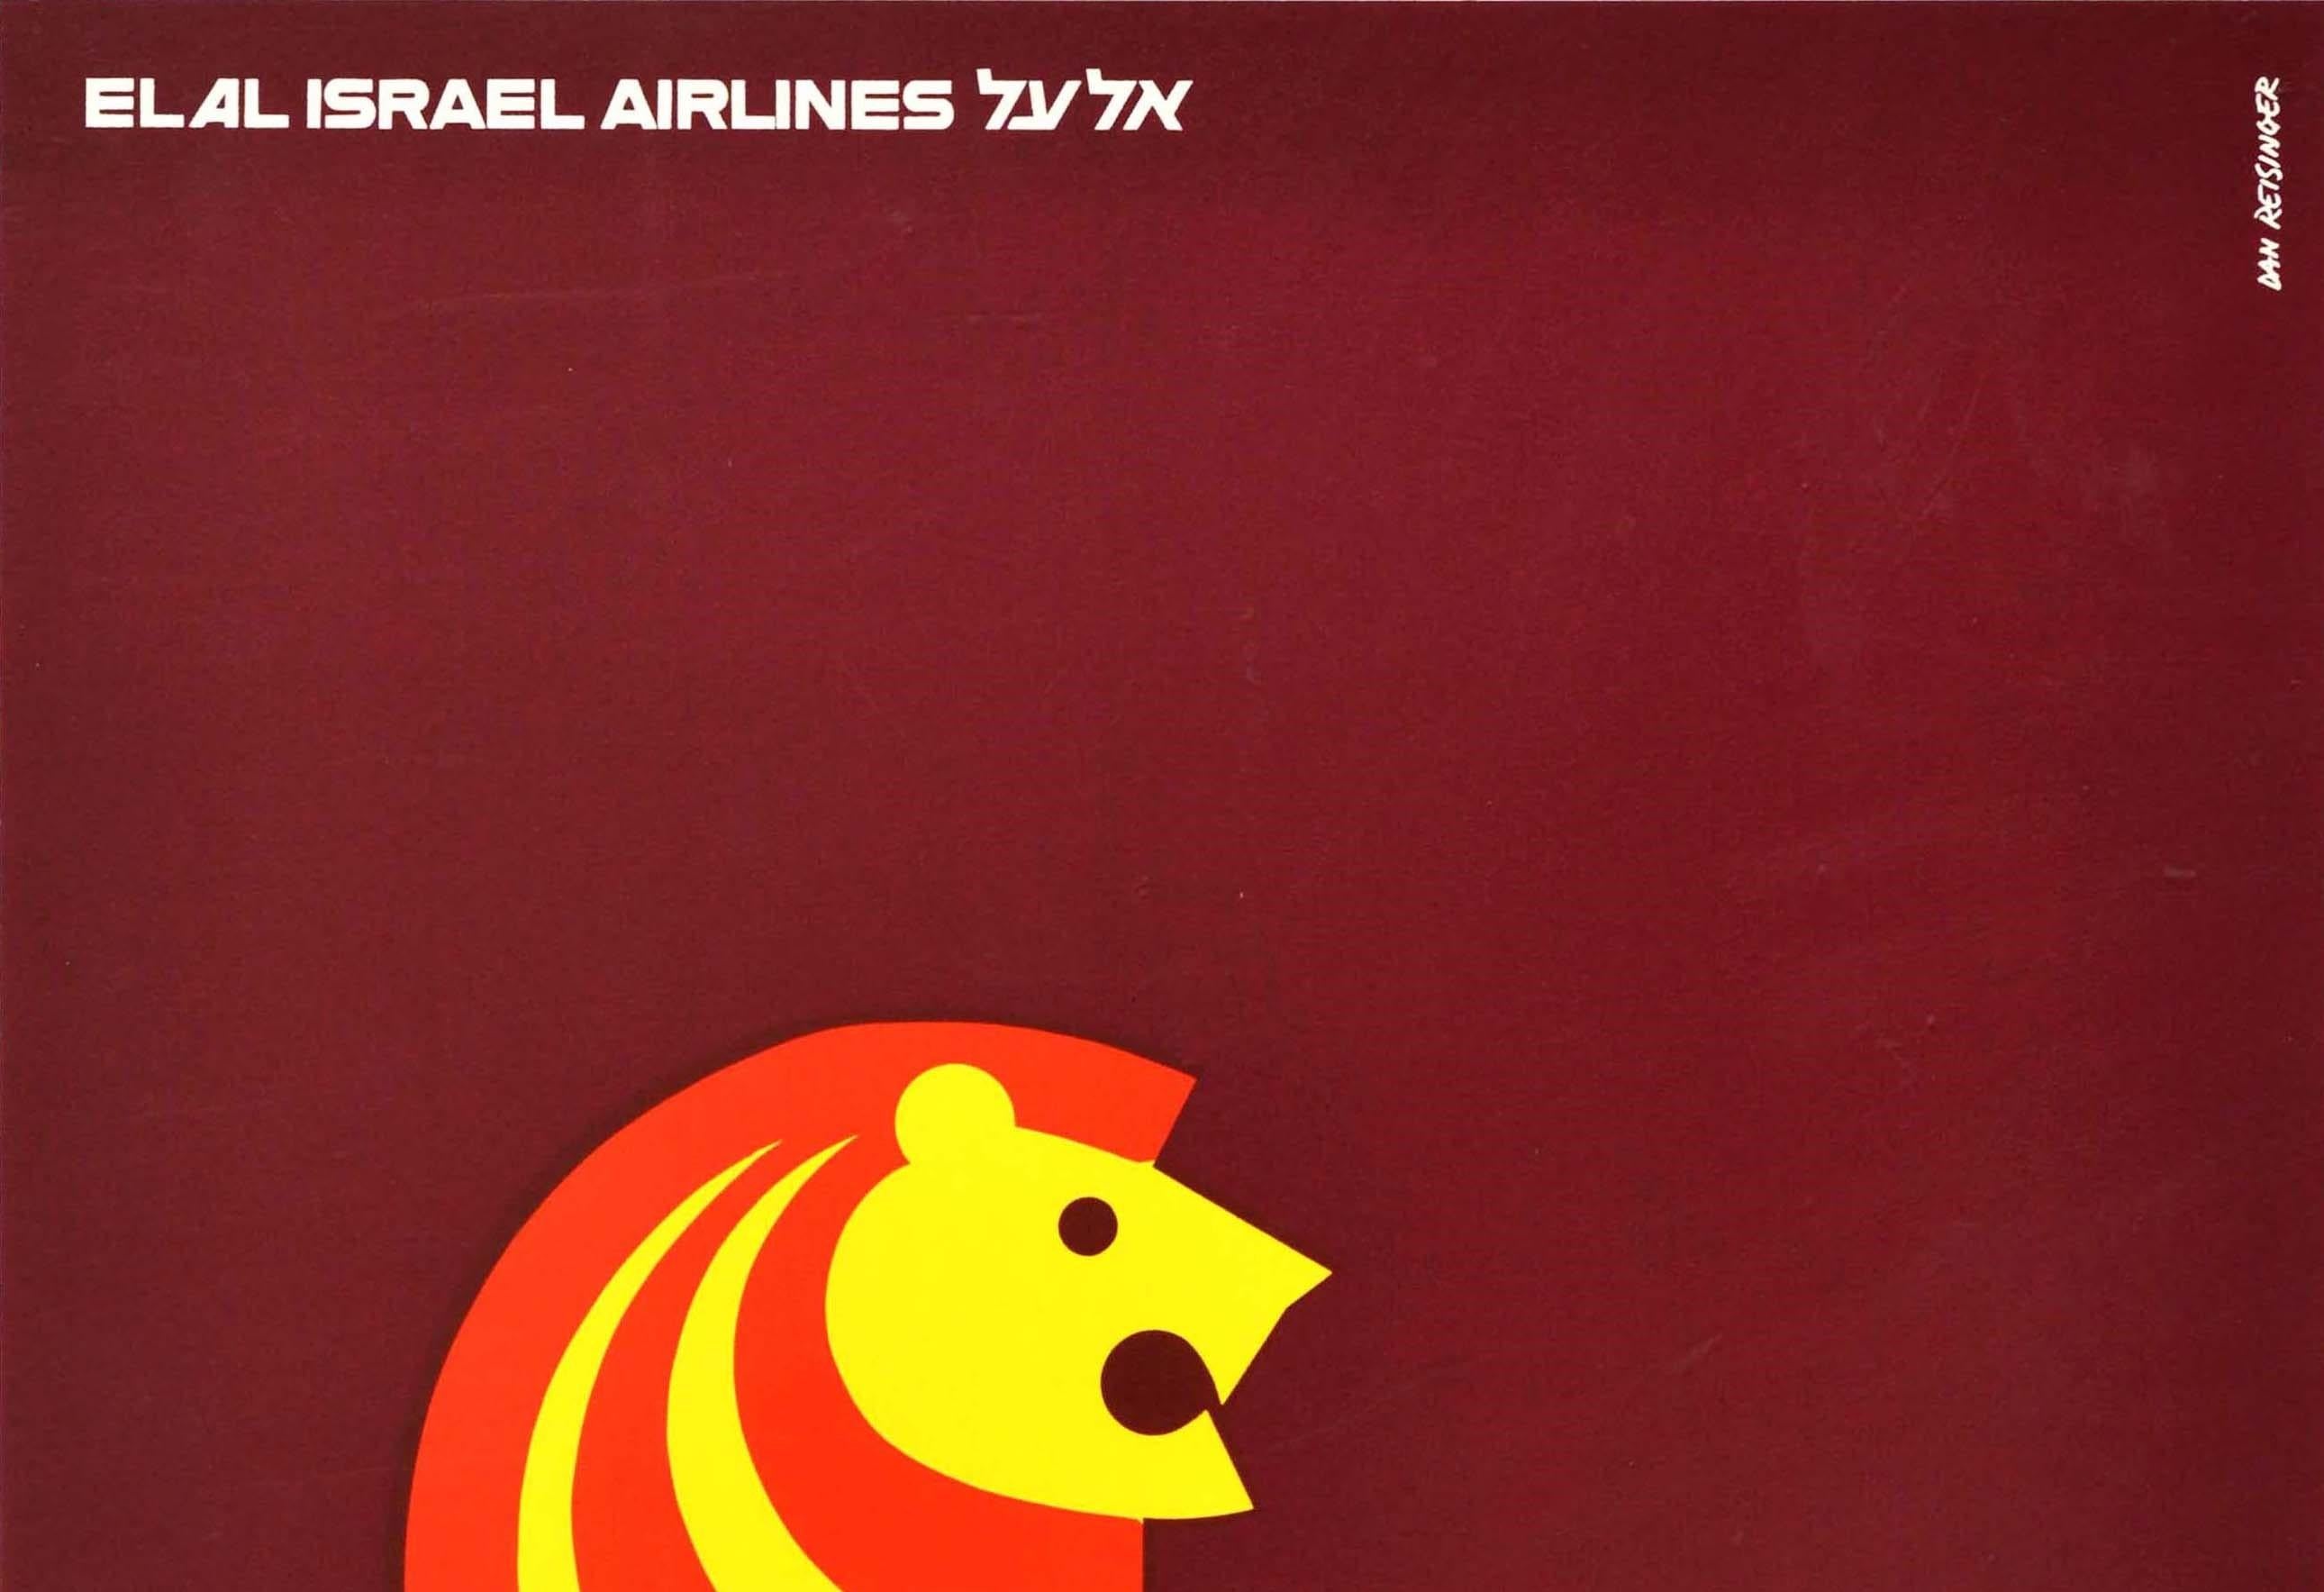 Original Vintage Air Travel Poster El Al Israel Airlines Jerusalem Lion Design - Print by Dan Reisinger